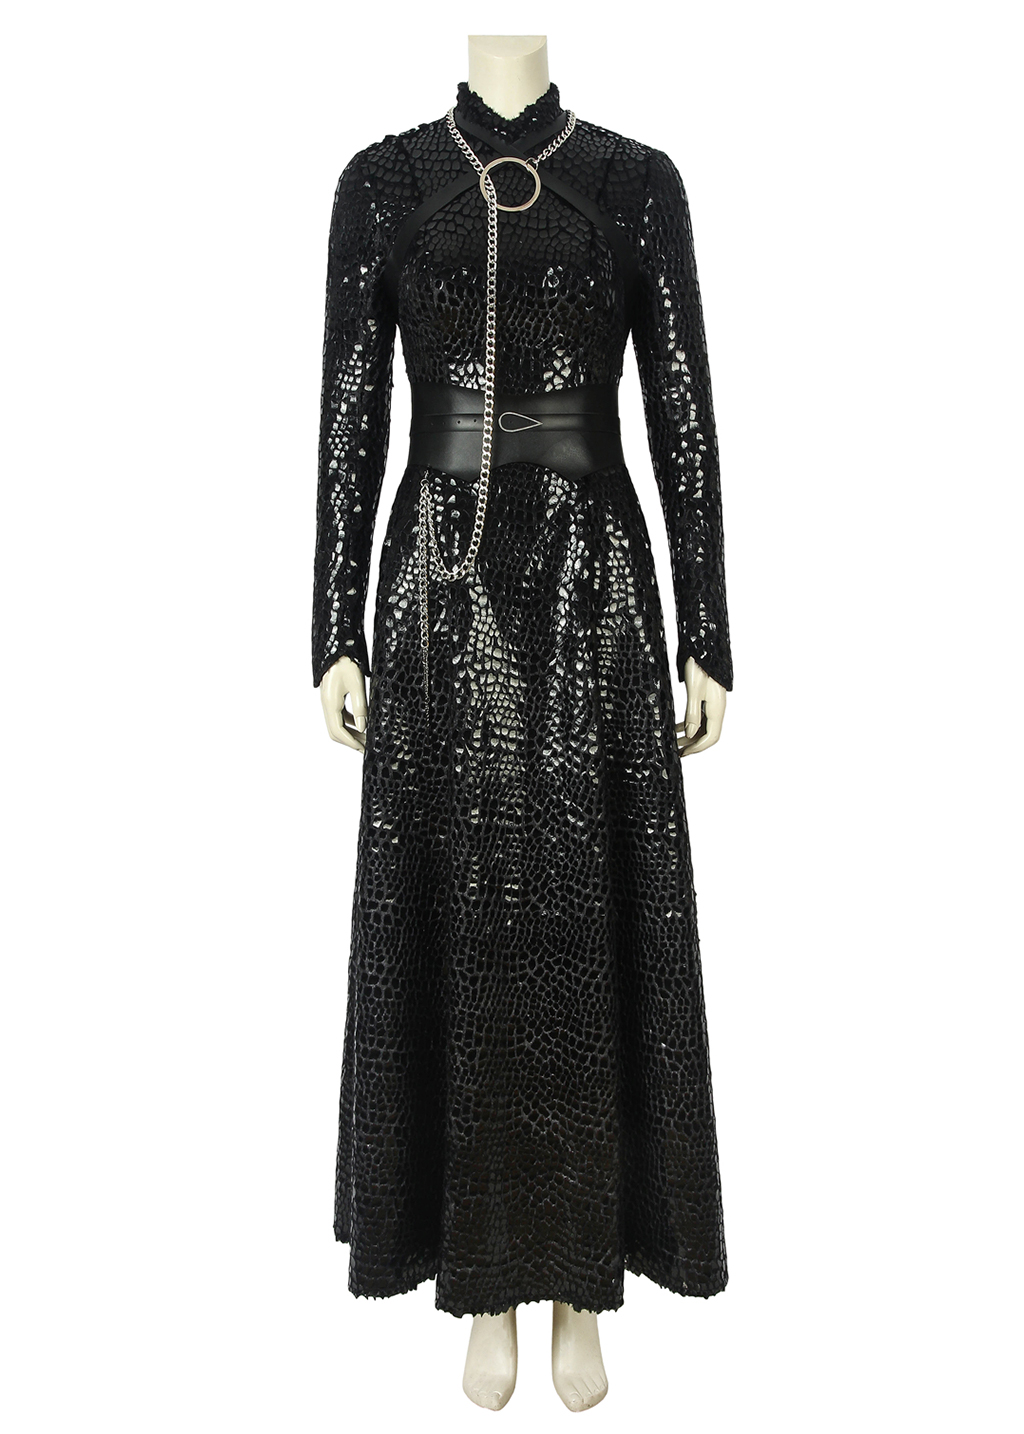 Sansa Stark Costume Game of Thrones Season 8 Suit Cosplay